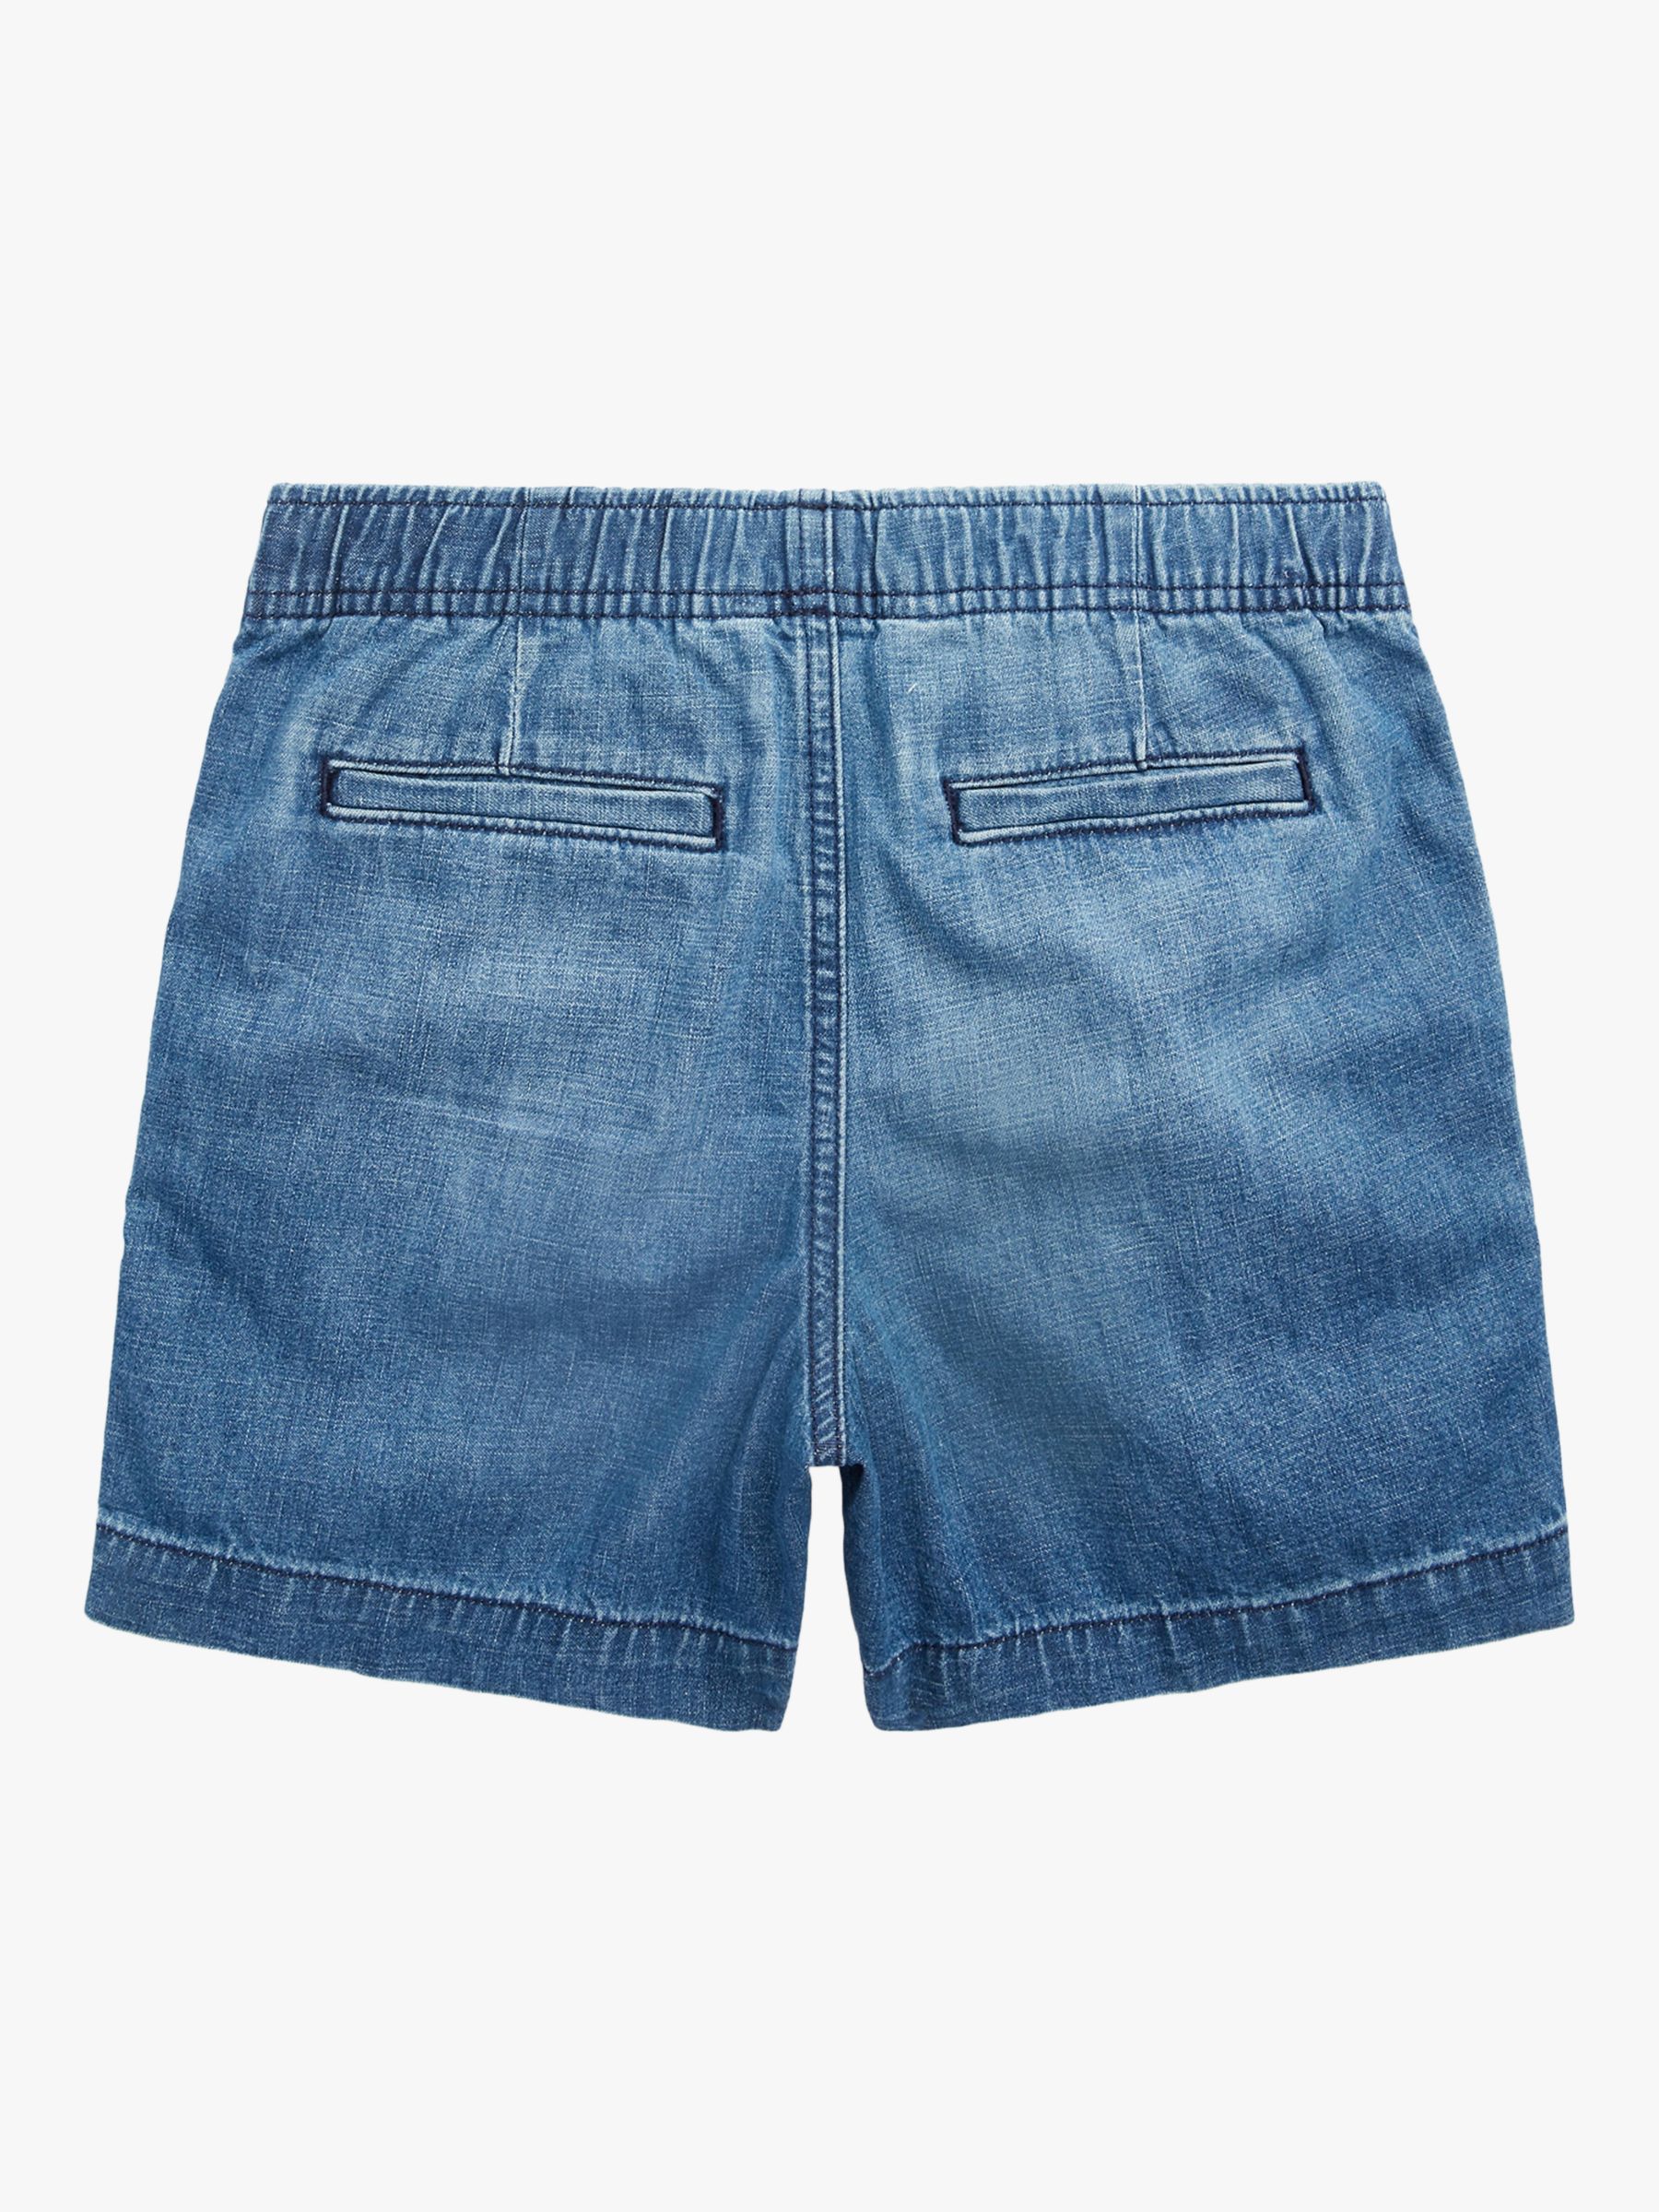 Polo Ralph Lauren Kids' Prepster Denim Shorts, Blue